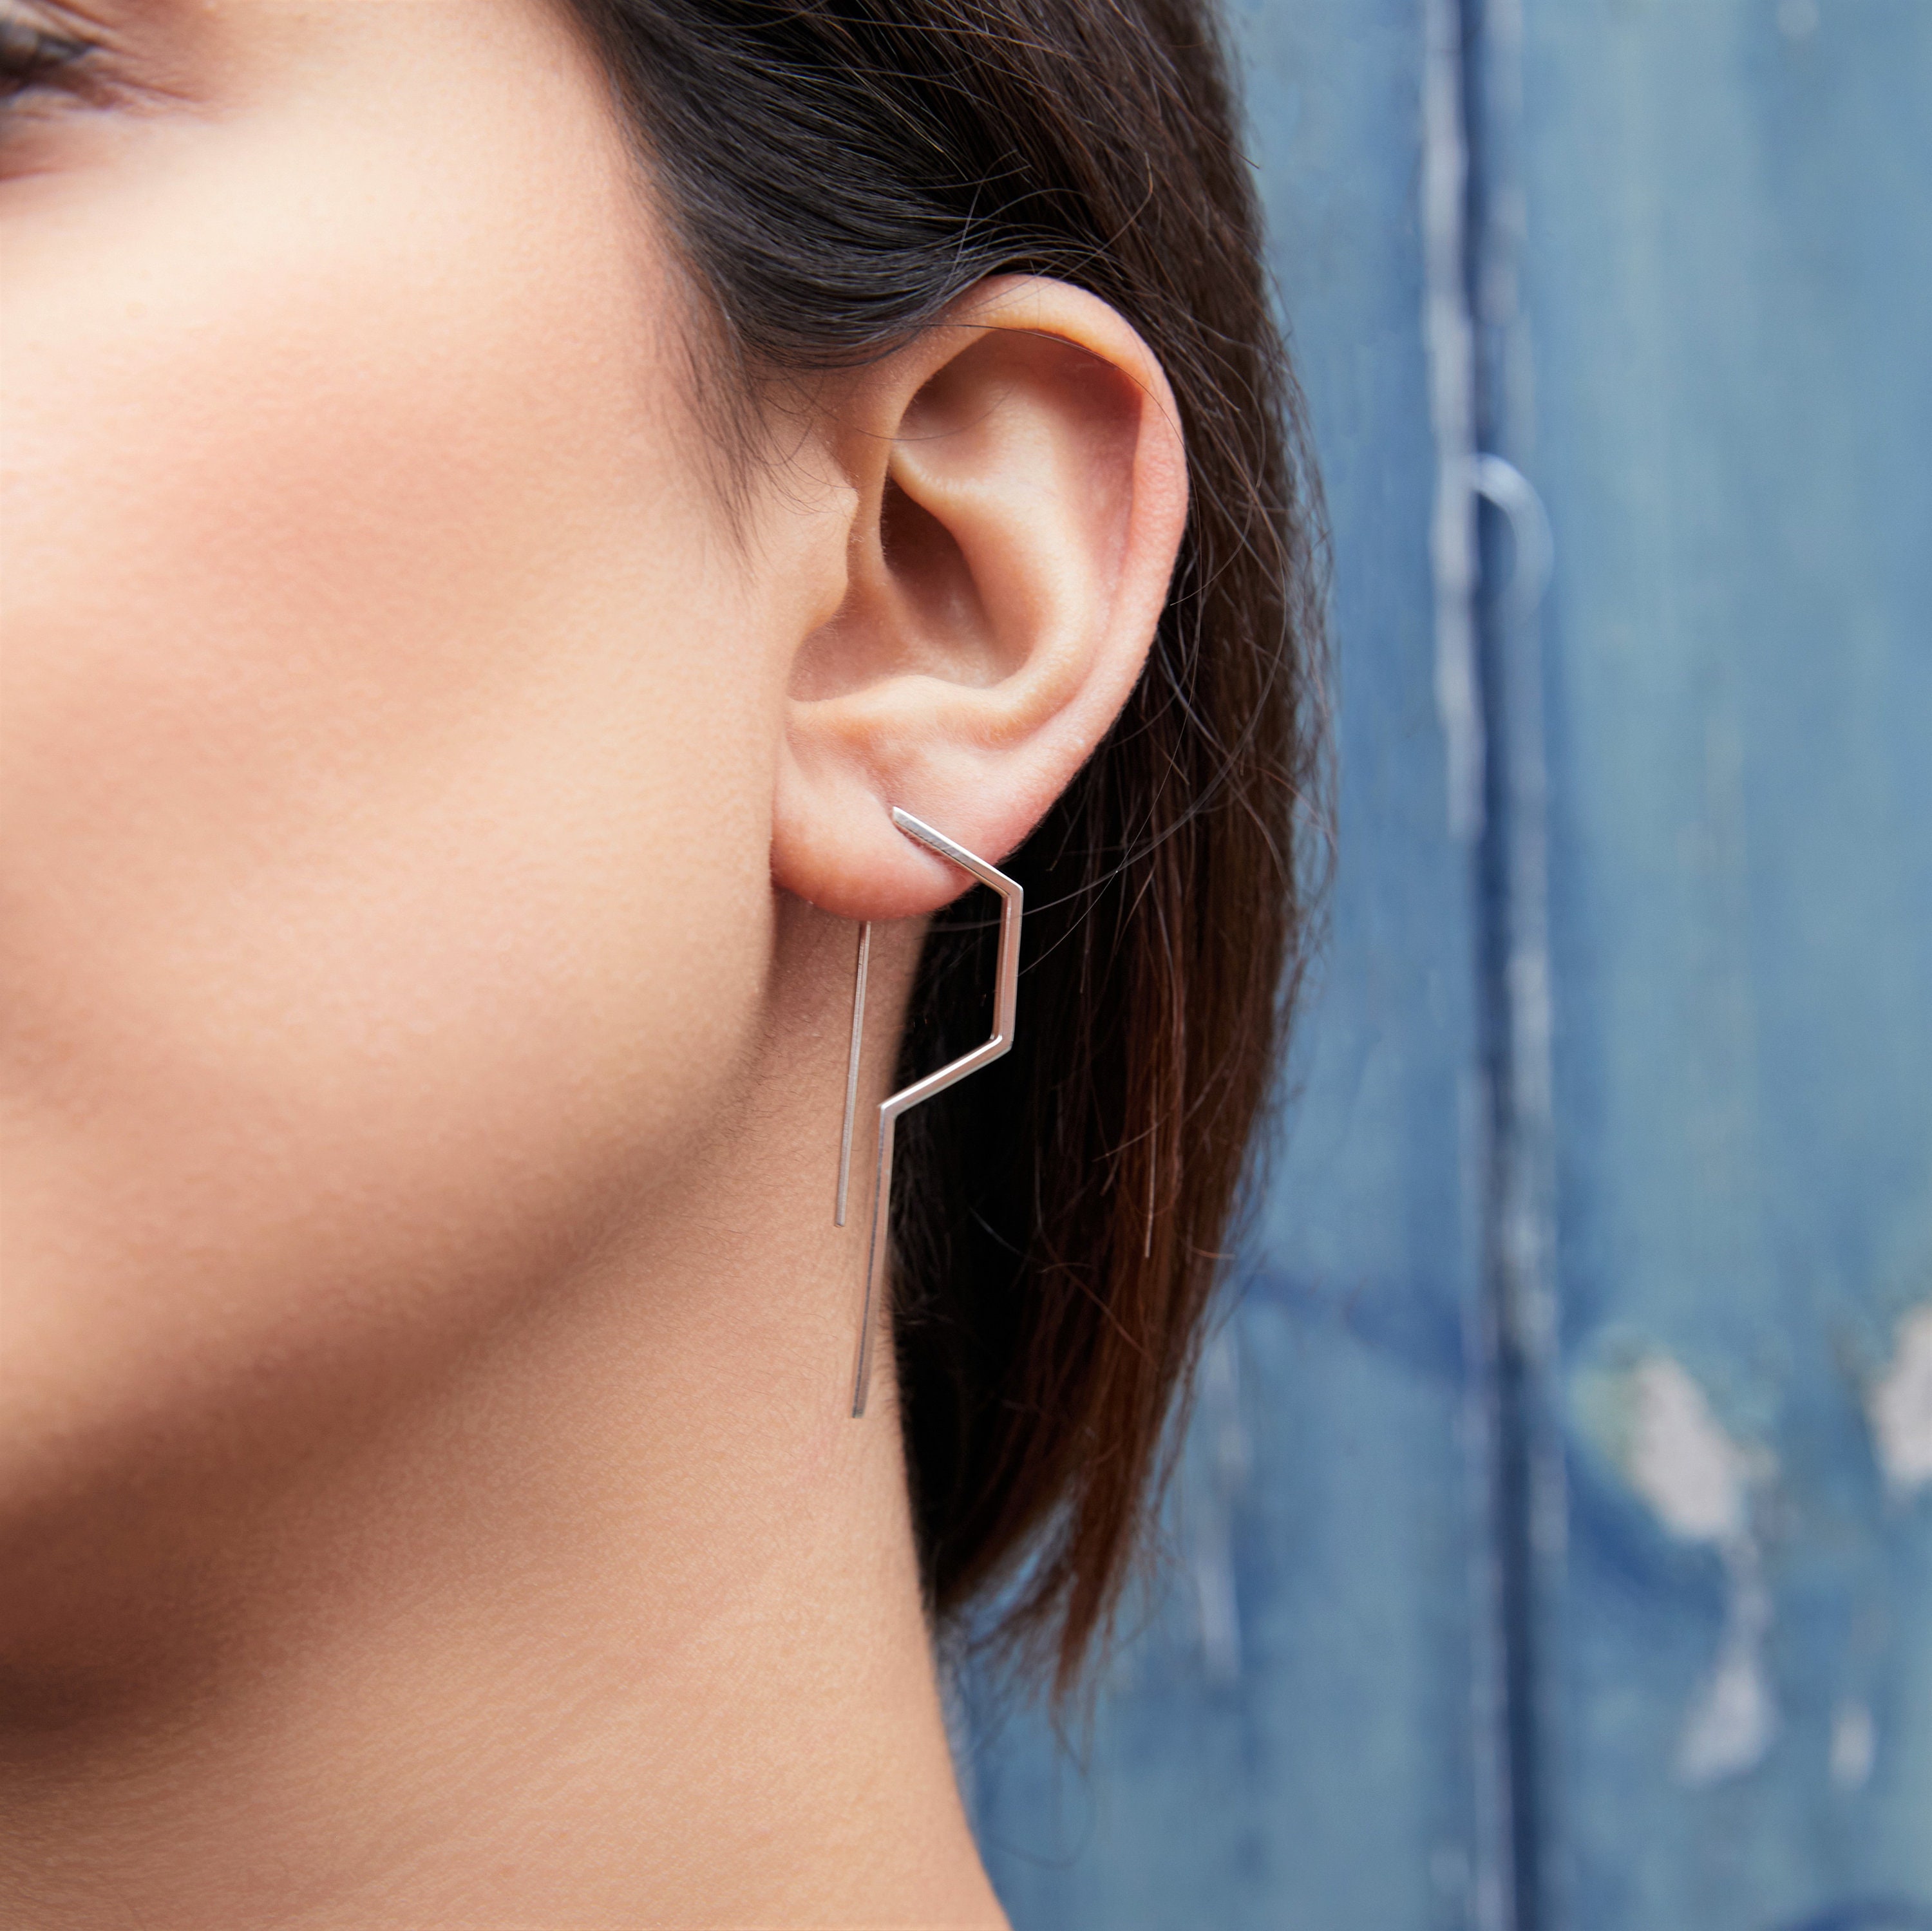 Drops swinging-silver-plated stud earrings minimalist geometric discreet